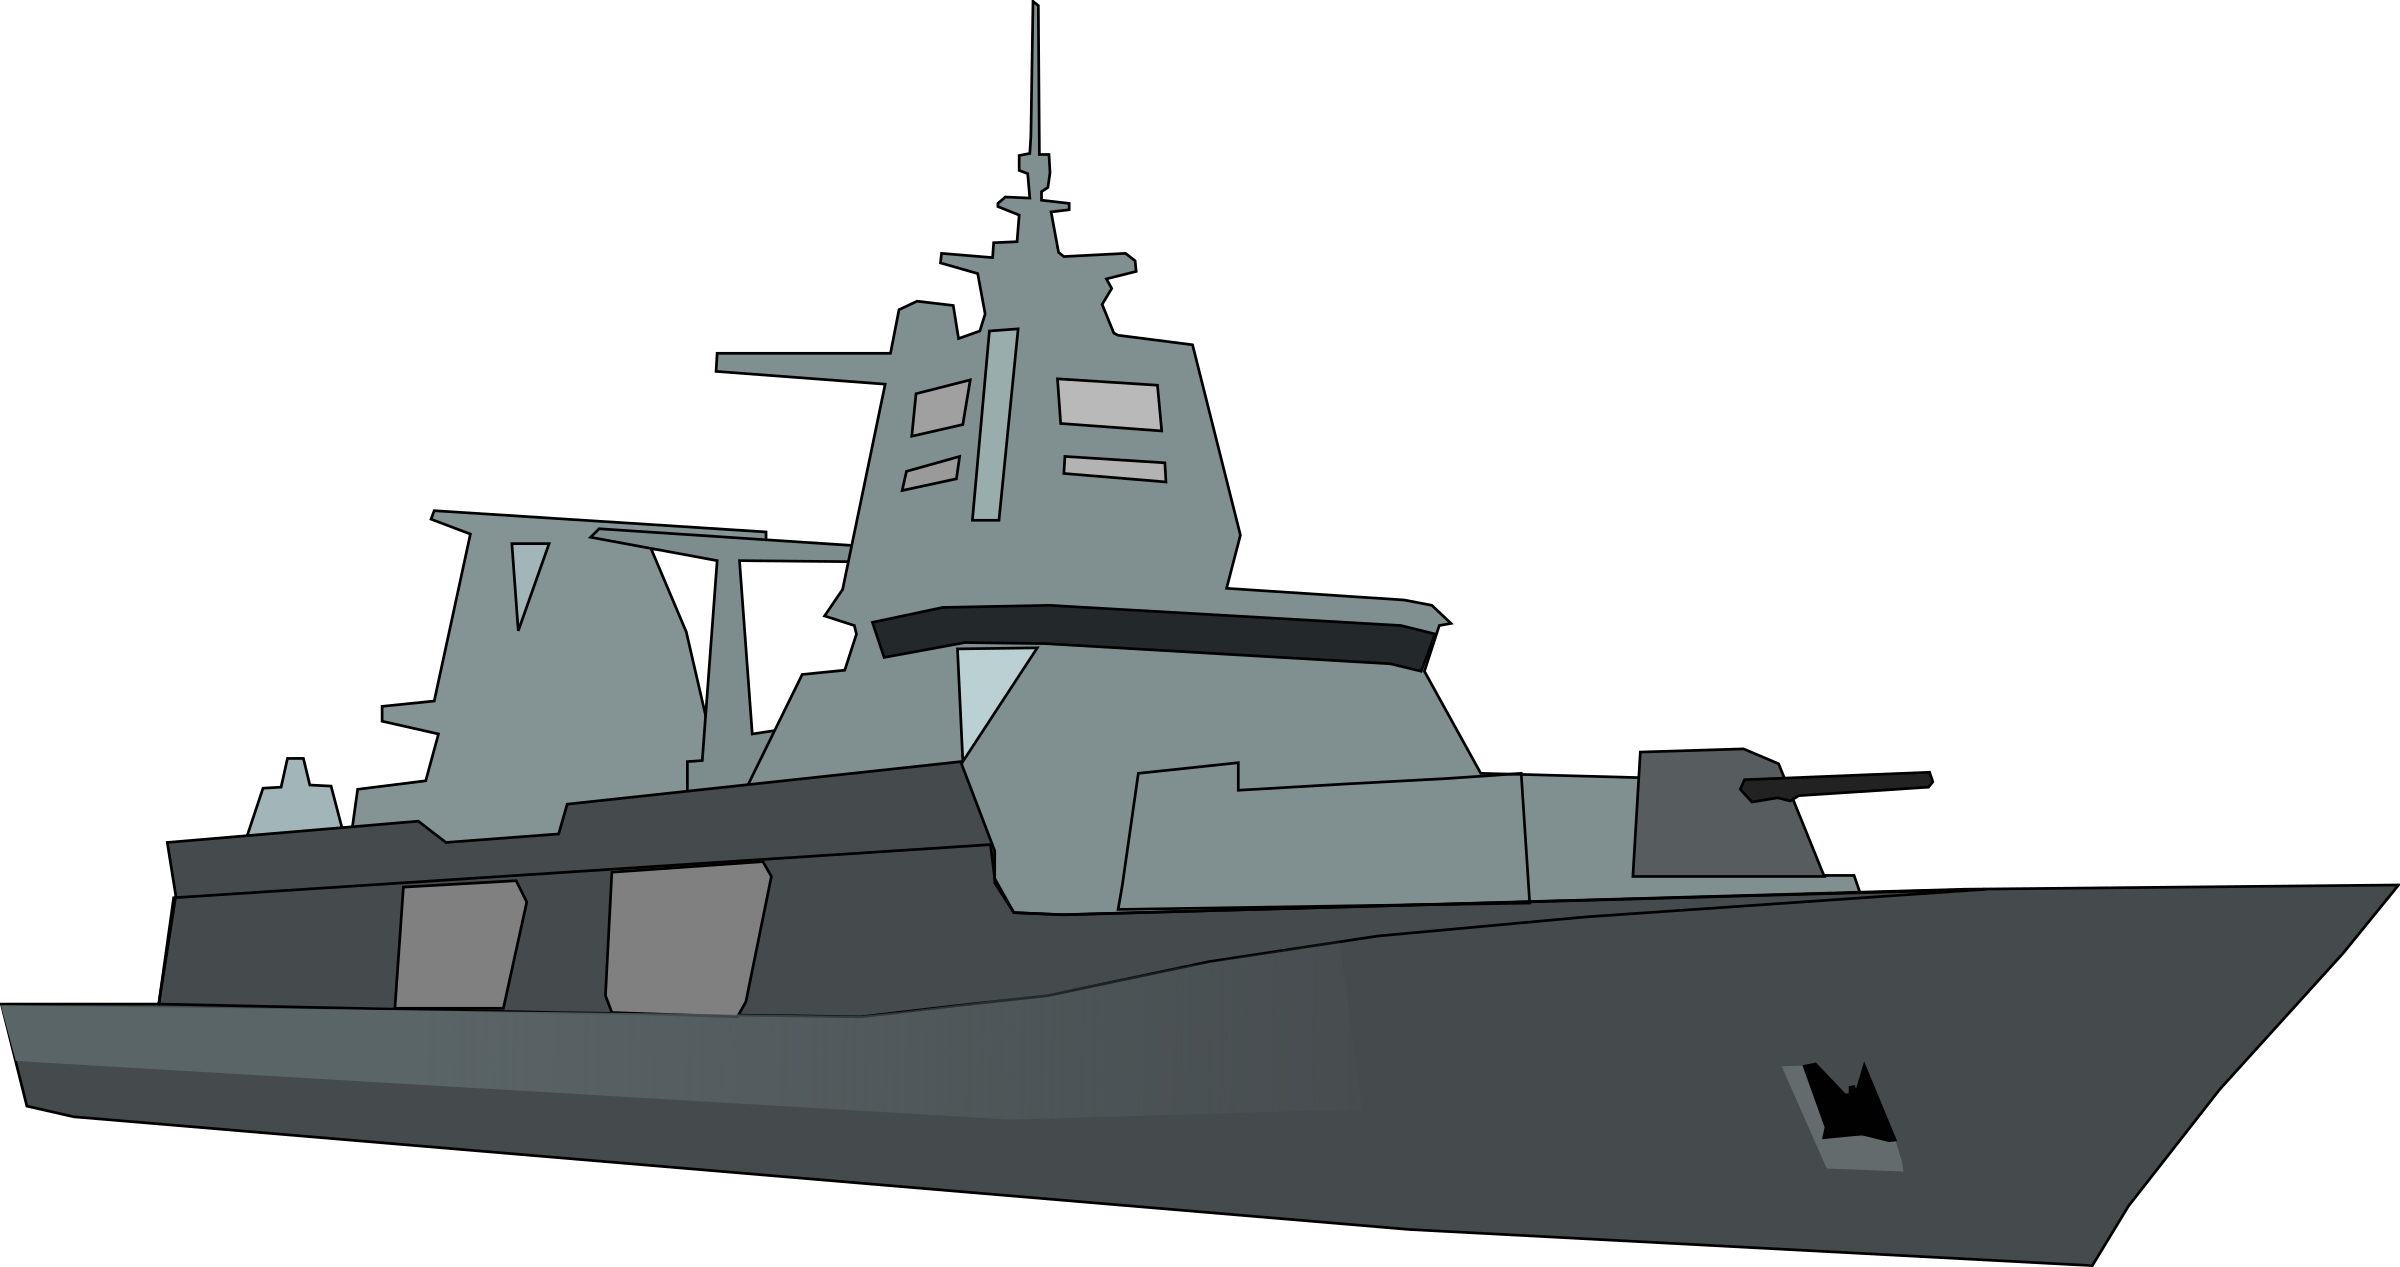 German Bundeswehr frigate SVG Clip arts